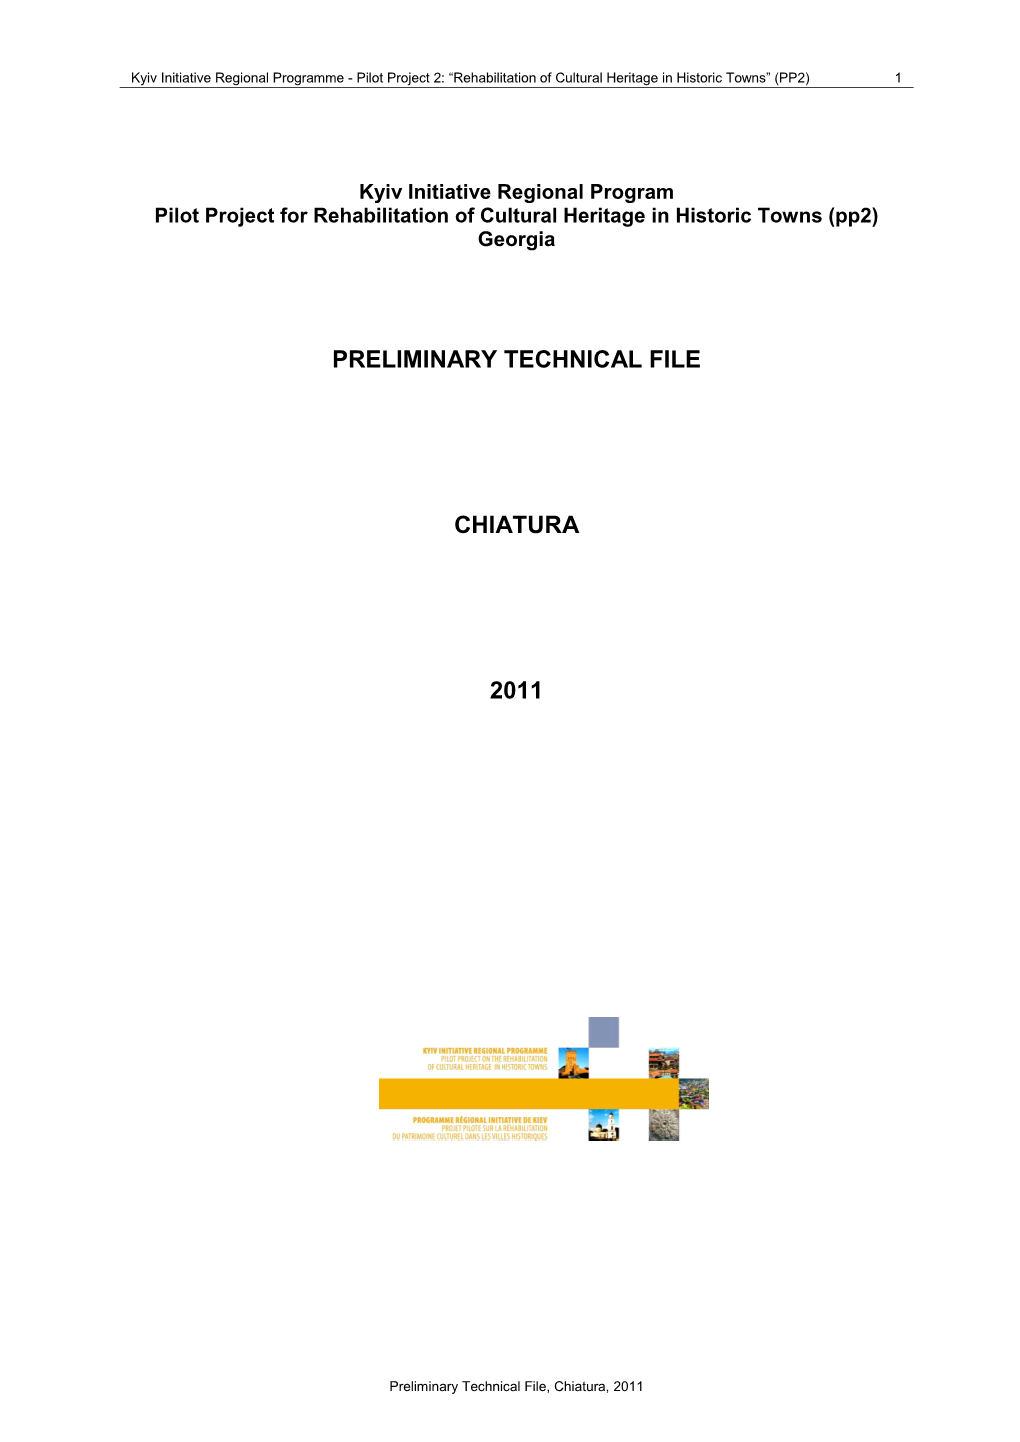 Preliminary Technical Files (PTF)